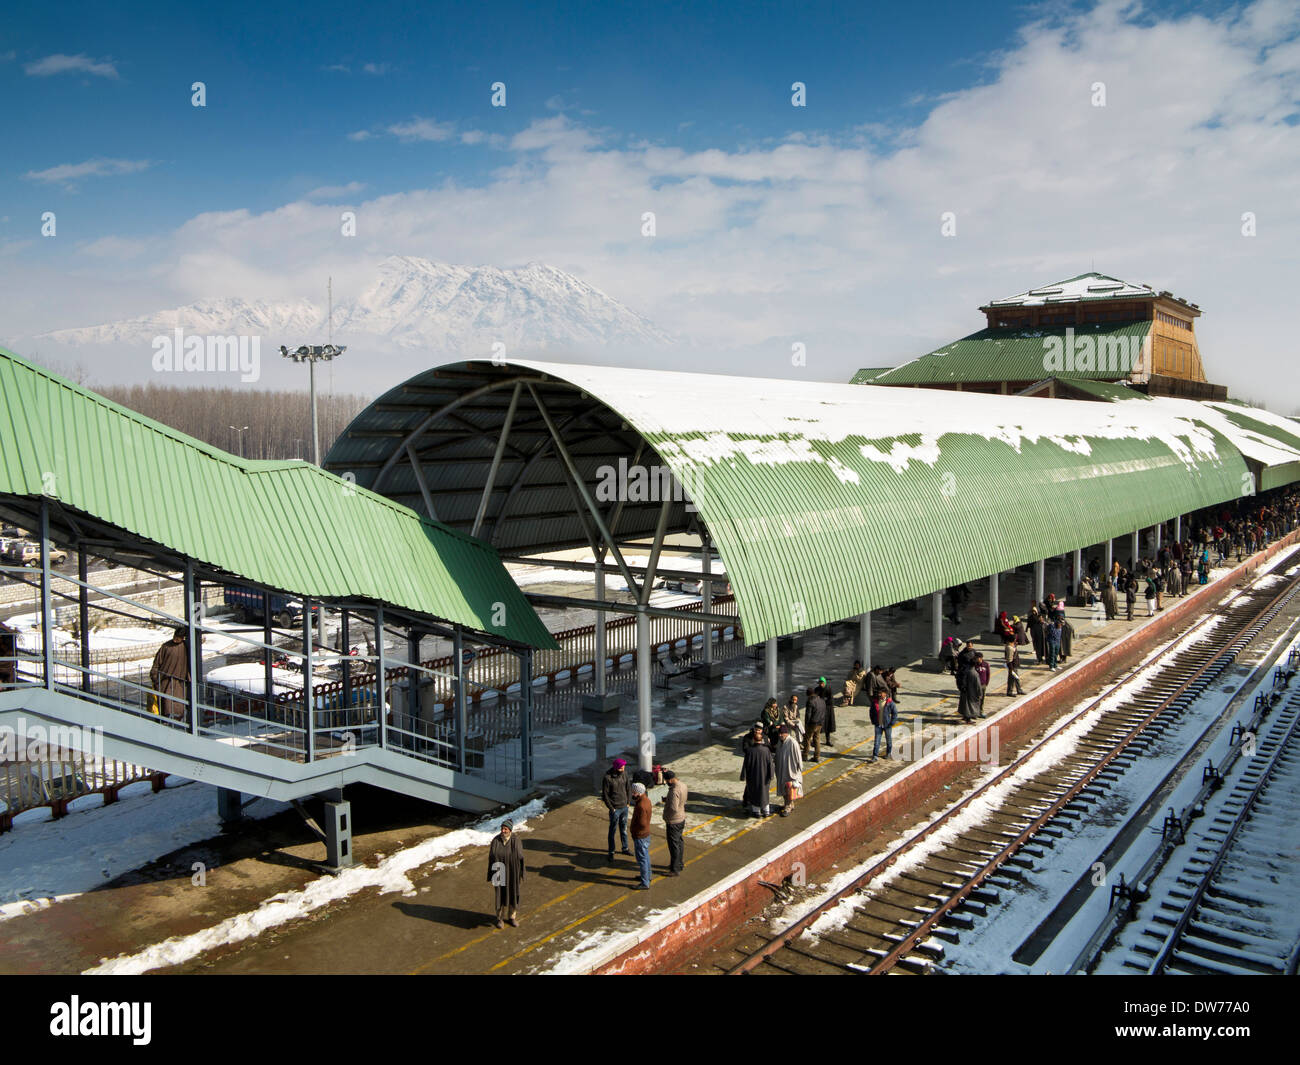 India, Kashmir, Srinagar Railway station in winter, passengers waiting on platform for arrival of train Stock Photo